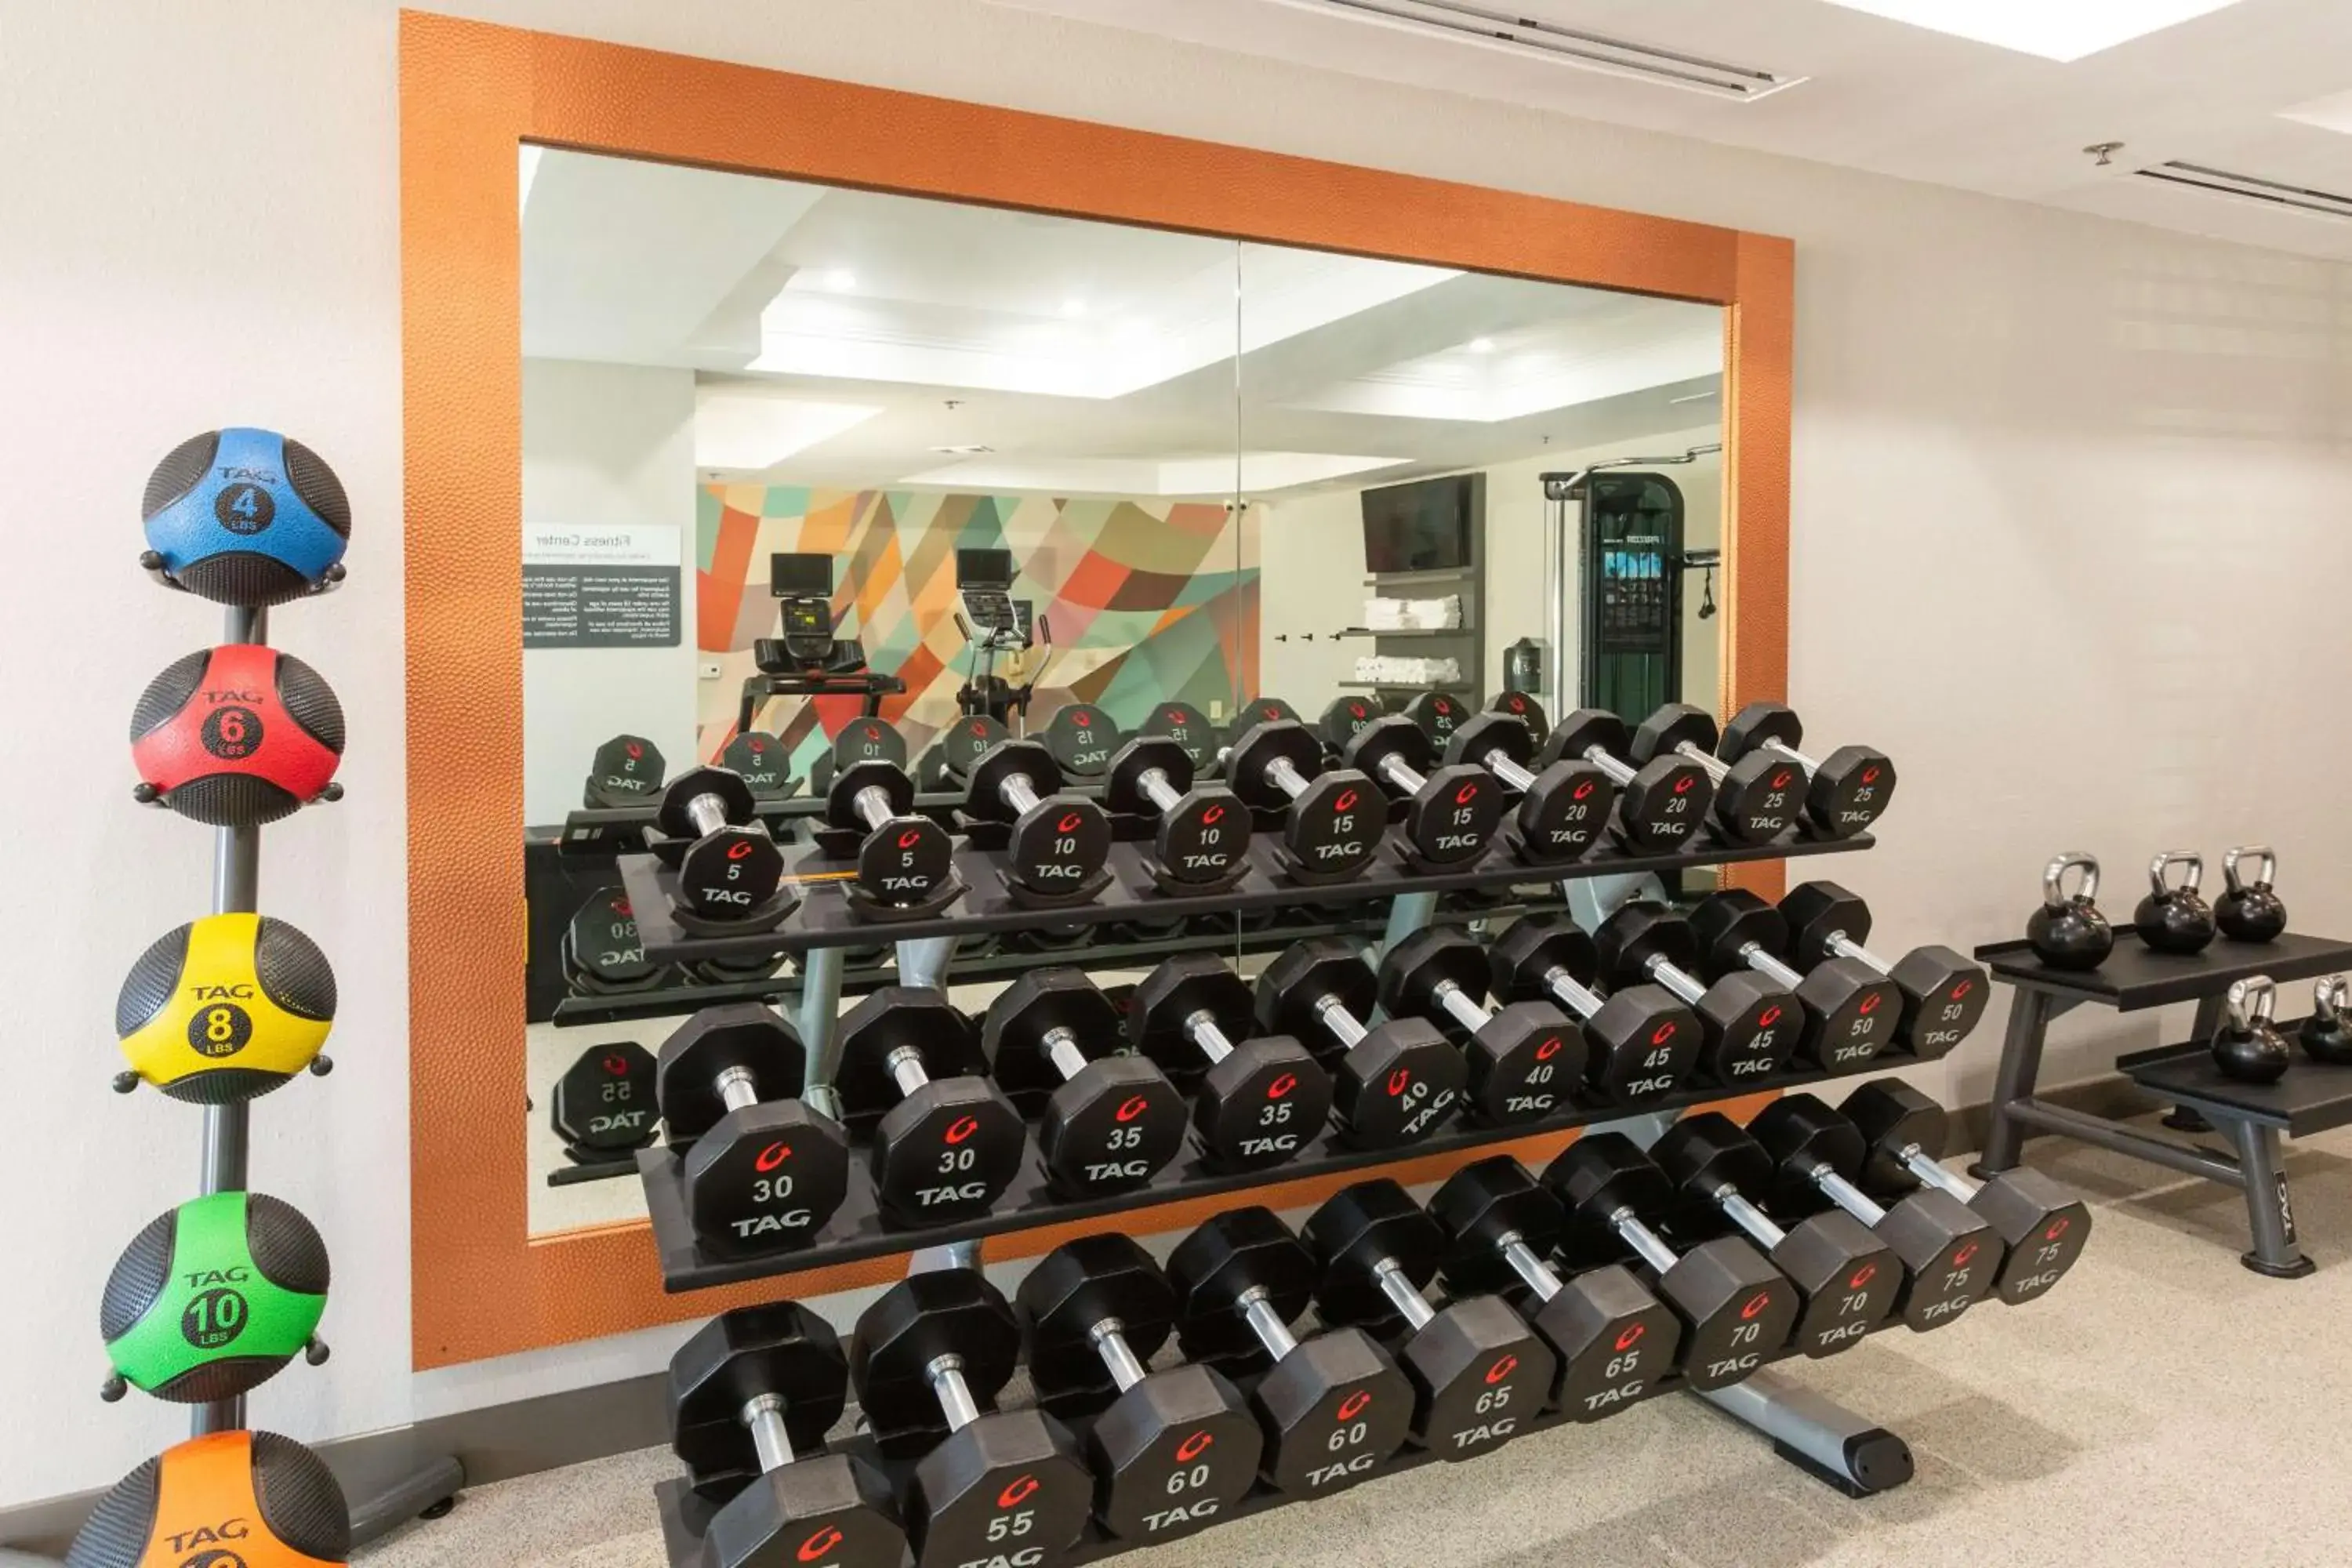 Fitness centre/facilities, Fitness Center/Facilities in Hilton Garden Inn Daytona Beach Airport